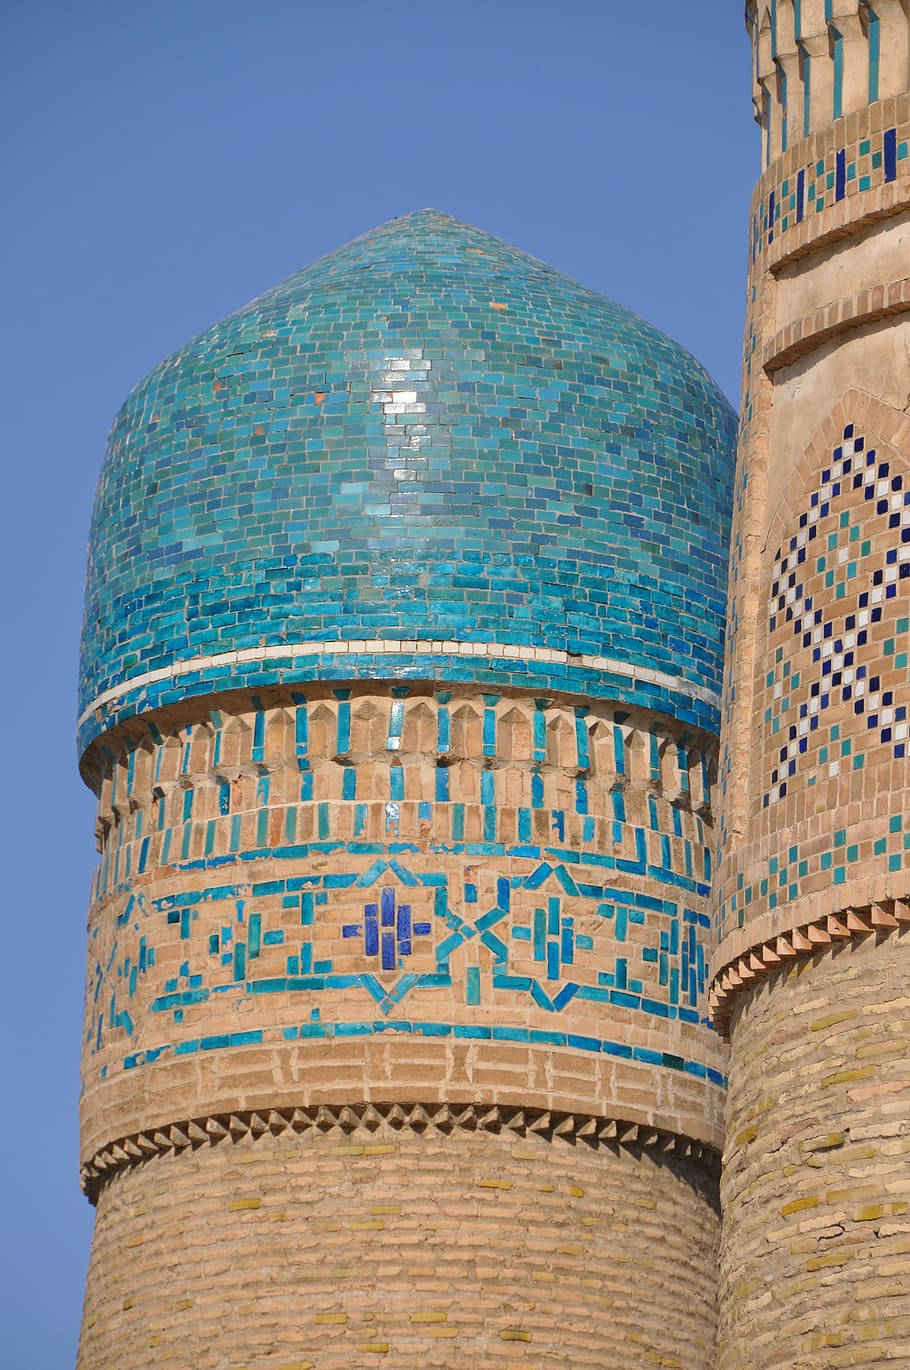 Uzbekistan Chor Minor Madrassah Tower